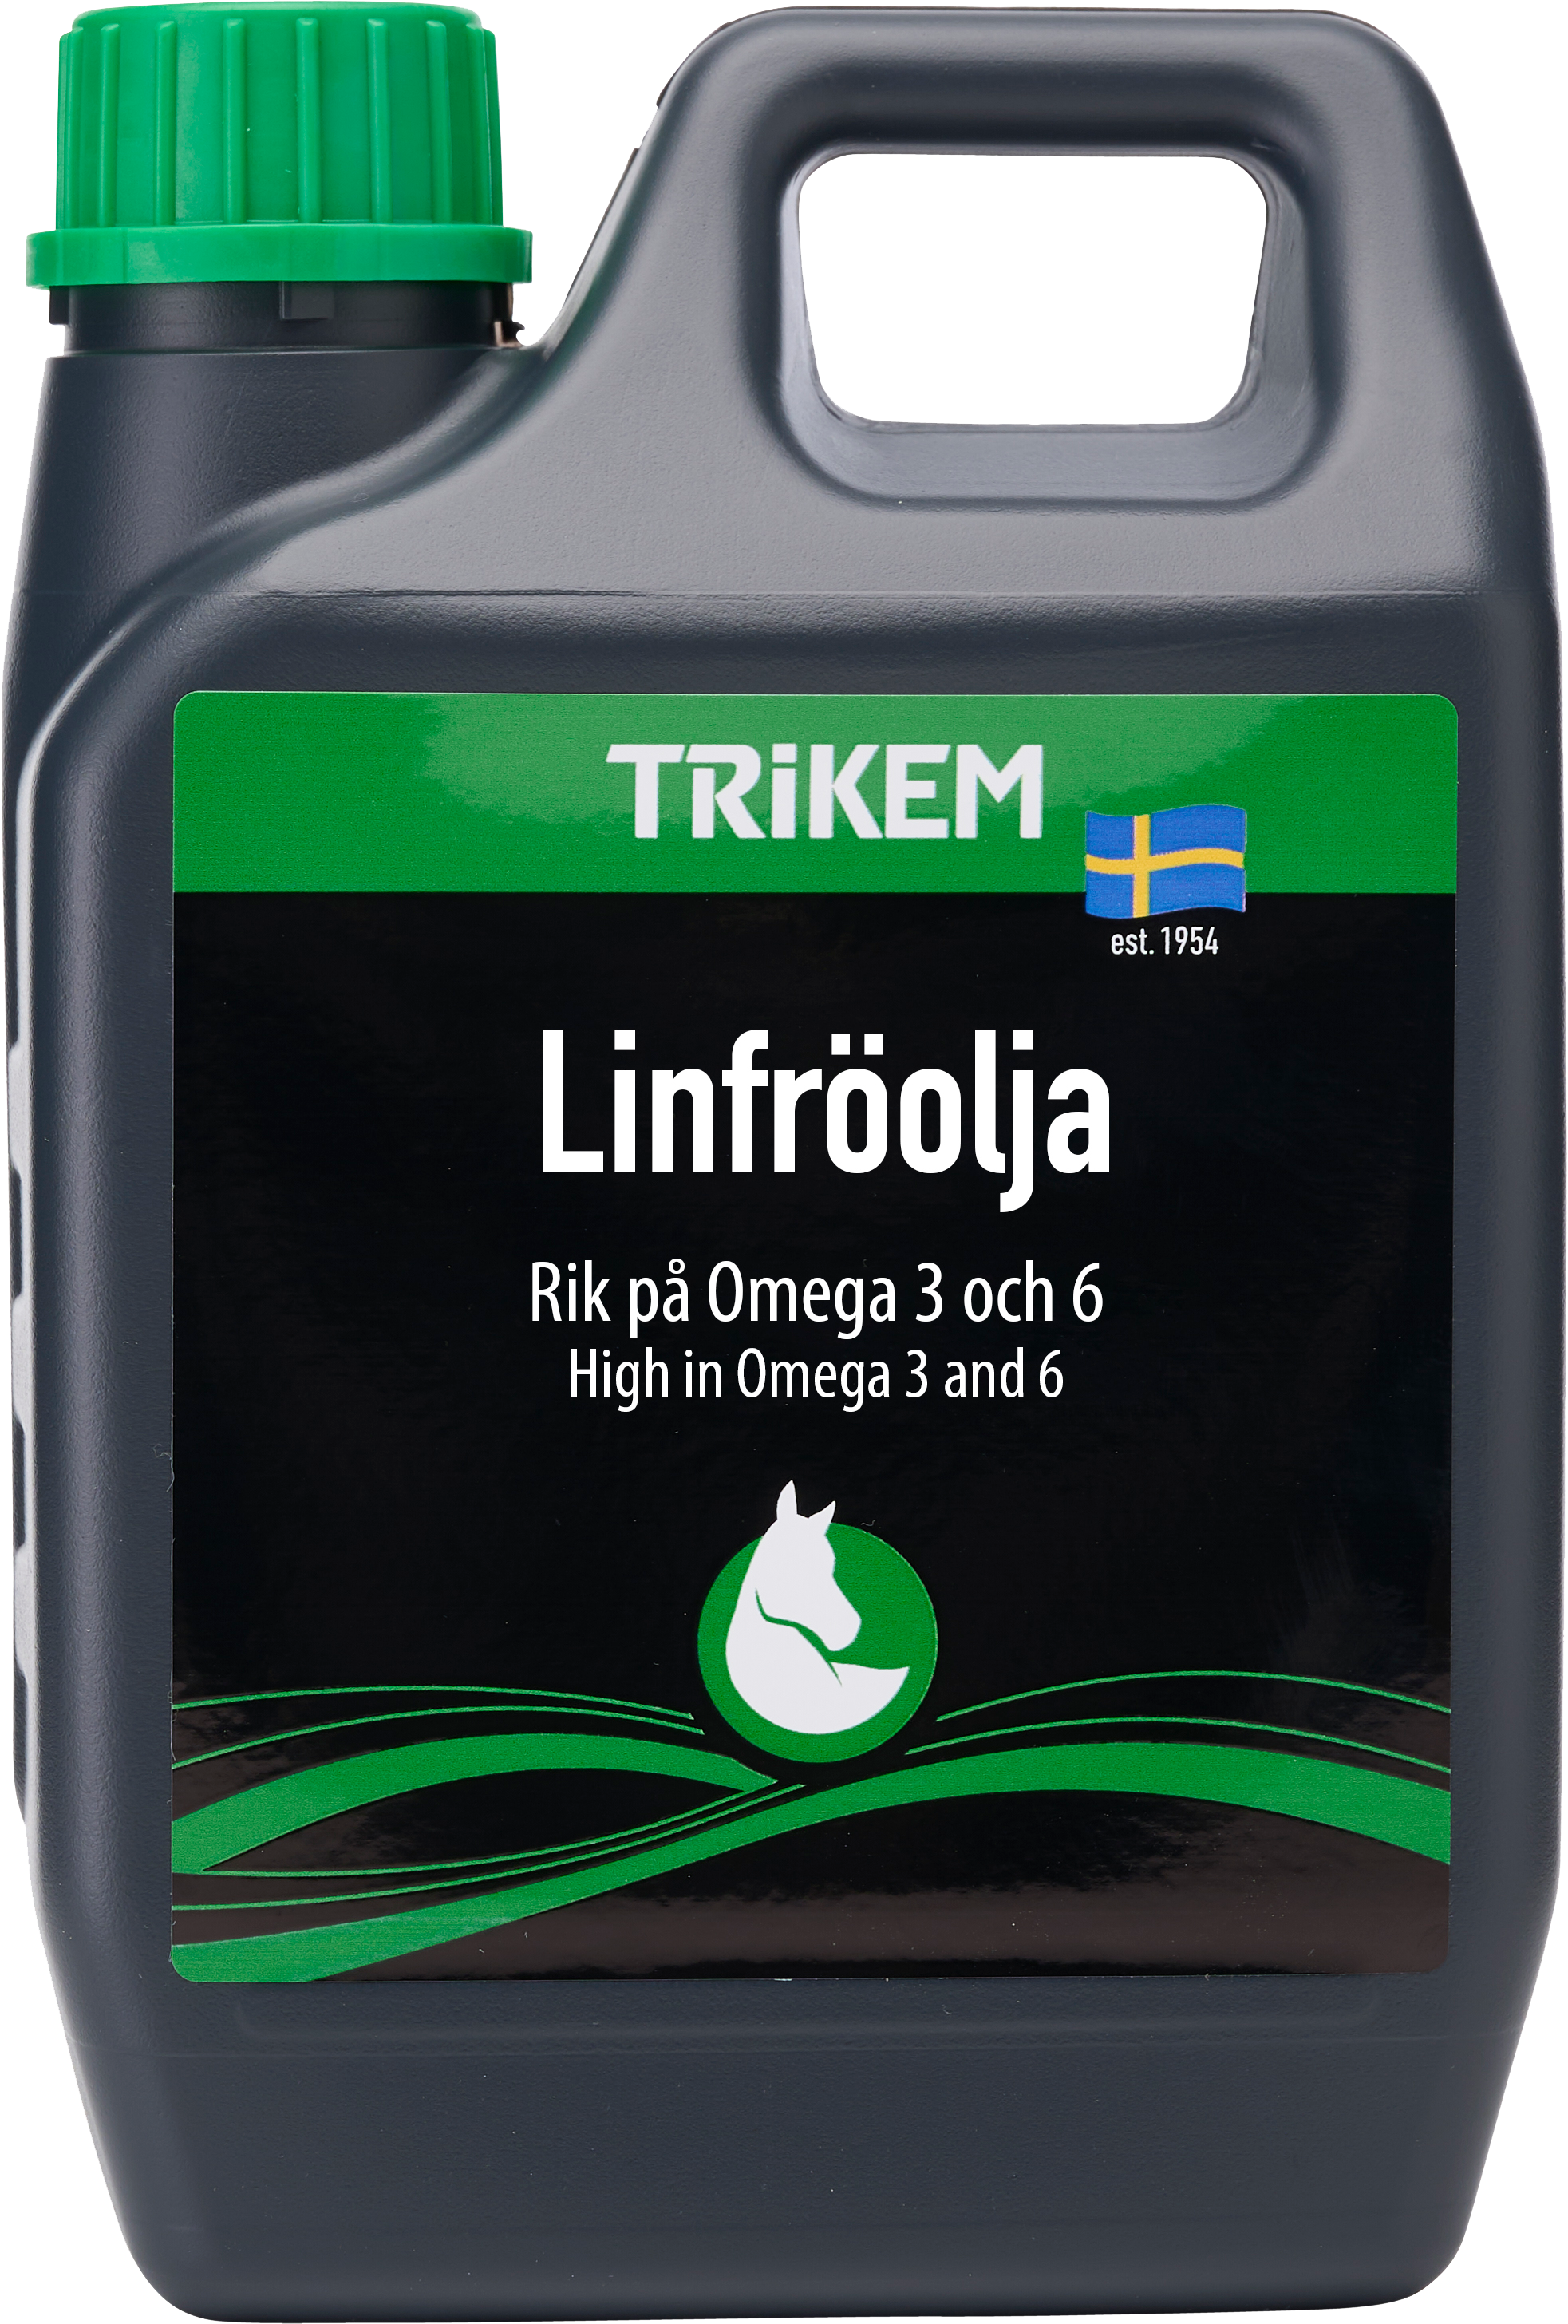 Trikem Linfröolja 1 Liter